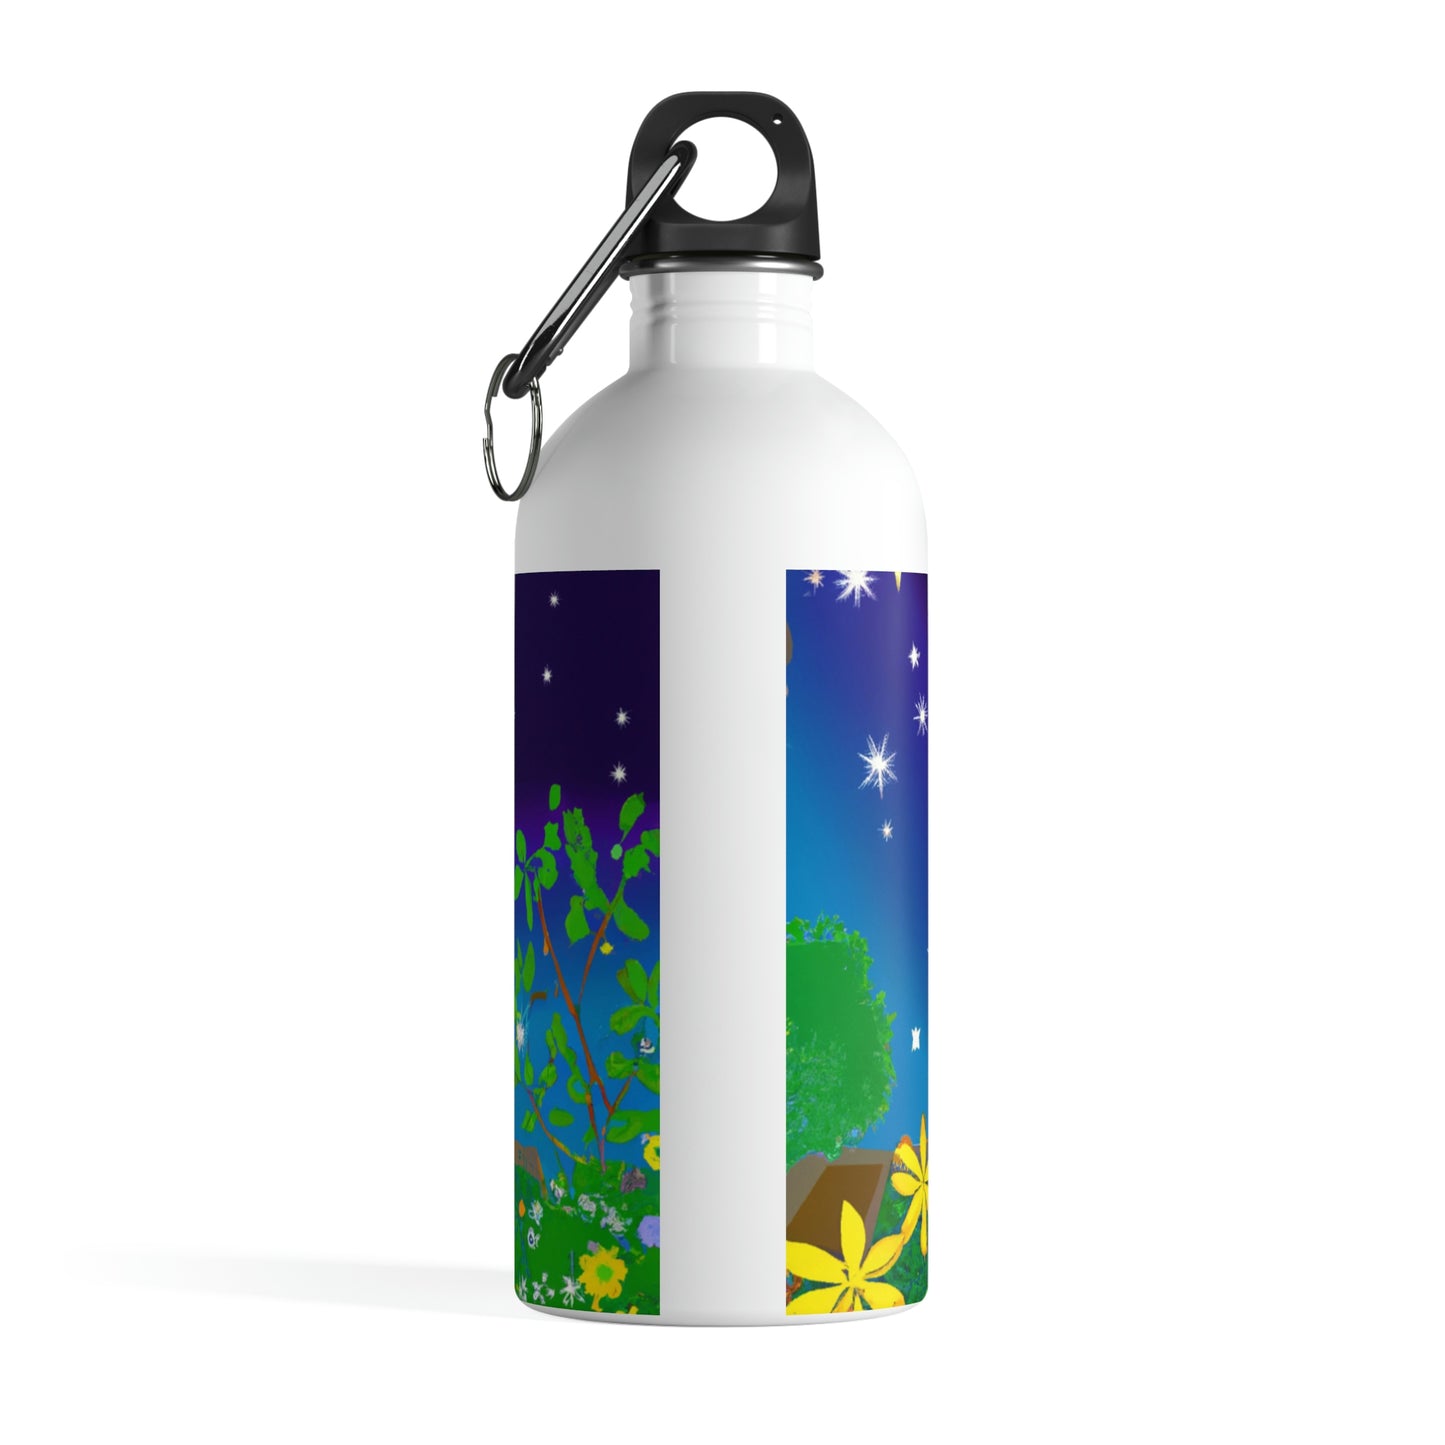 "A Celestial Garden of Color" - The Alien Stainless Steel Water Bottle